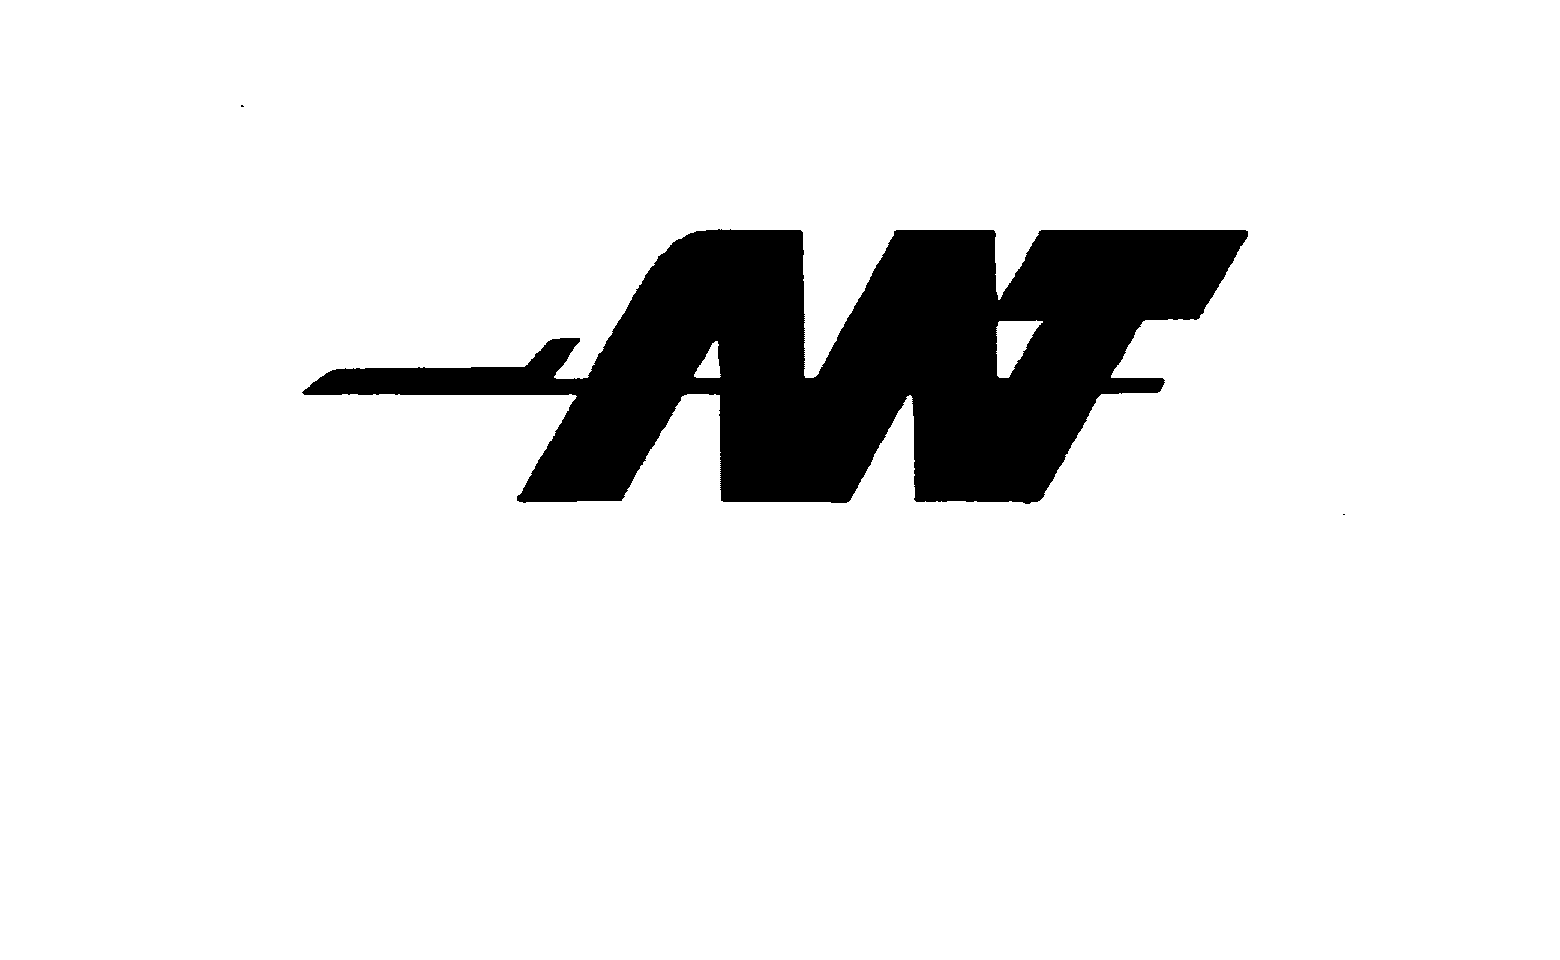 Trademark Logo AWT